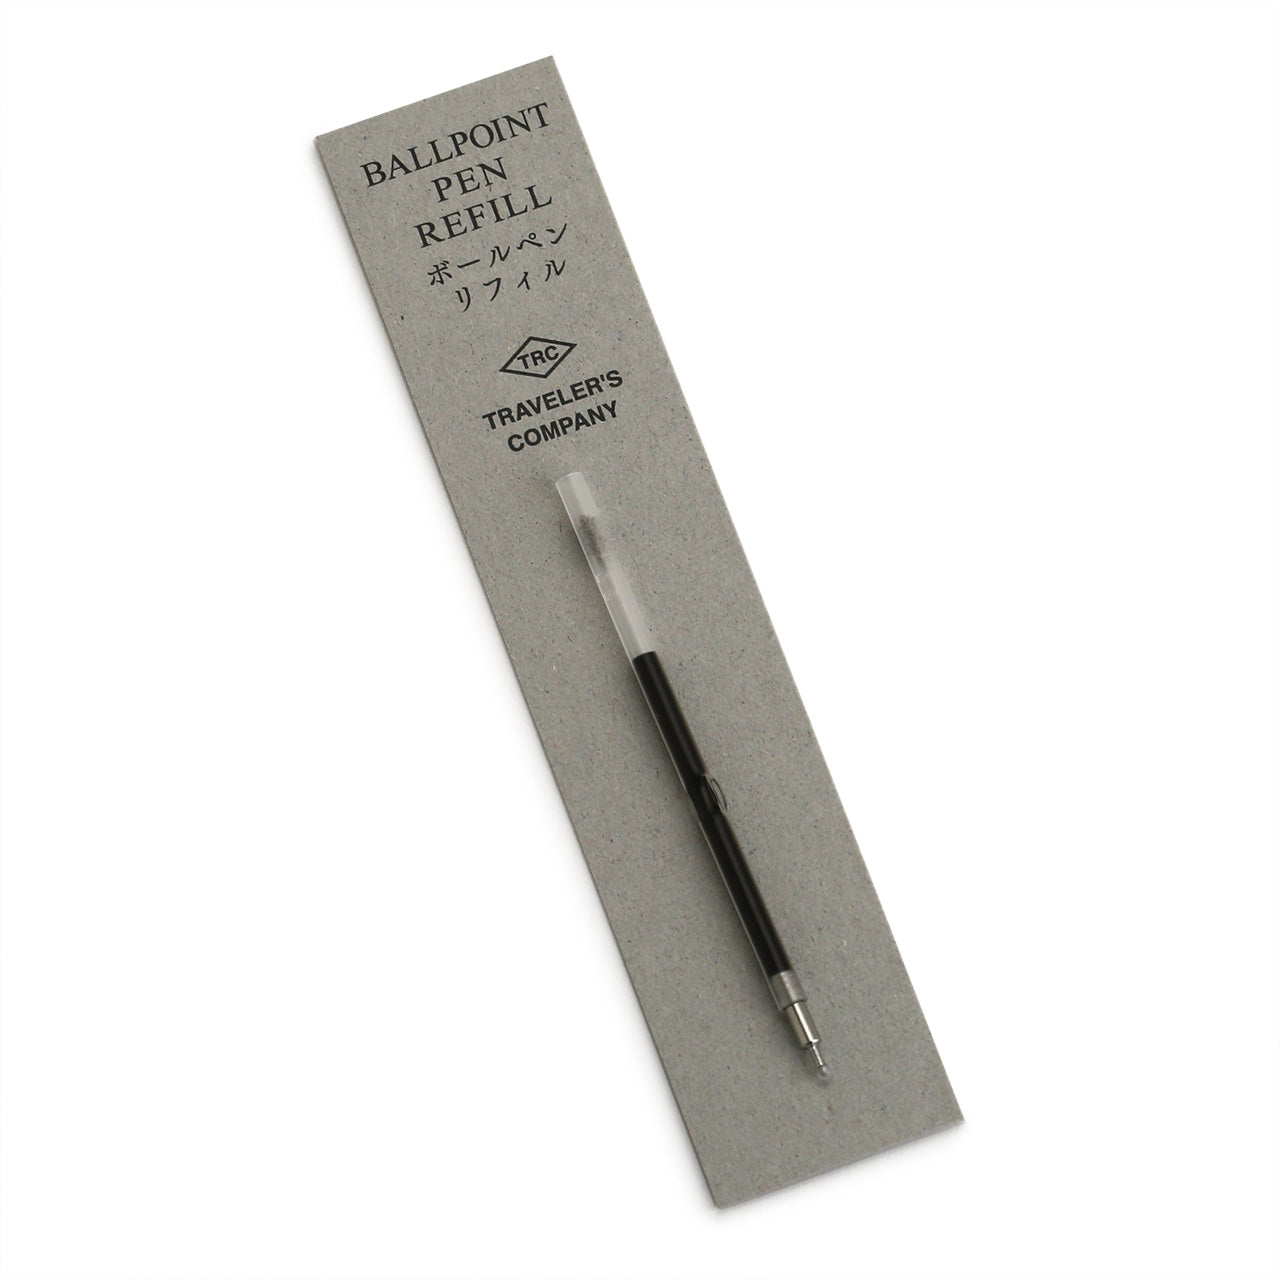 Traveeeler'scompany ballpoint pen refill on its Kraft packaging